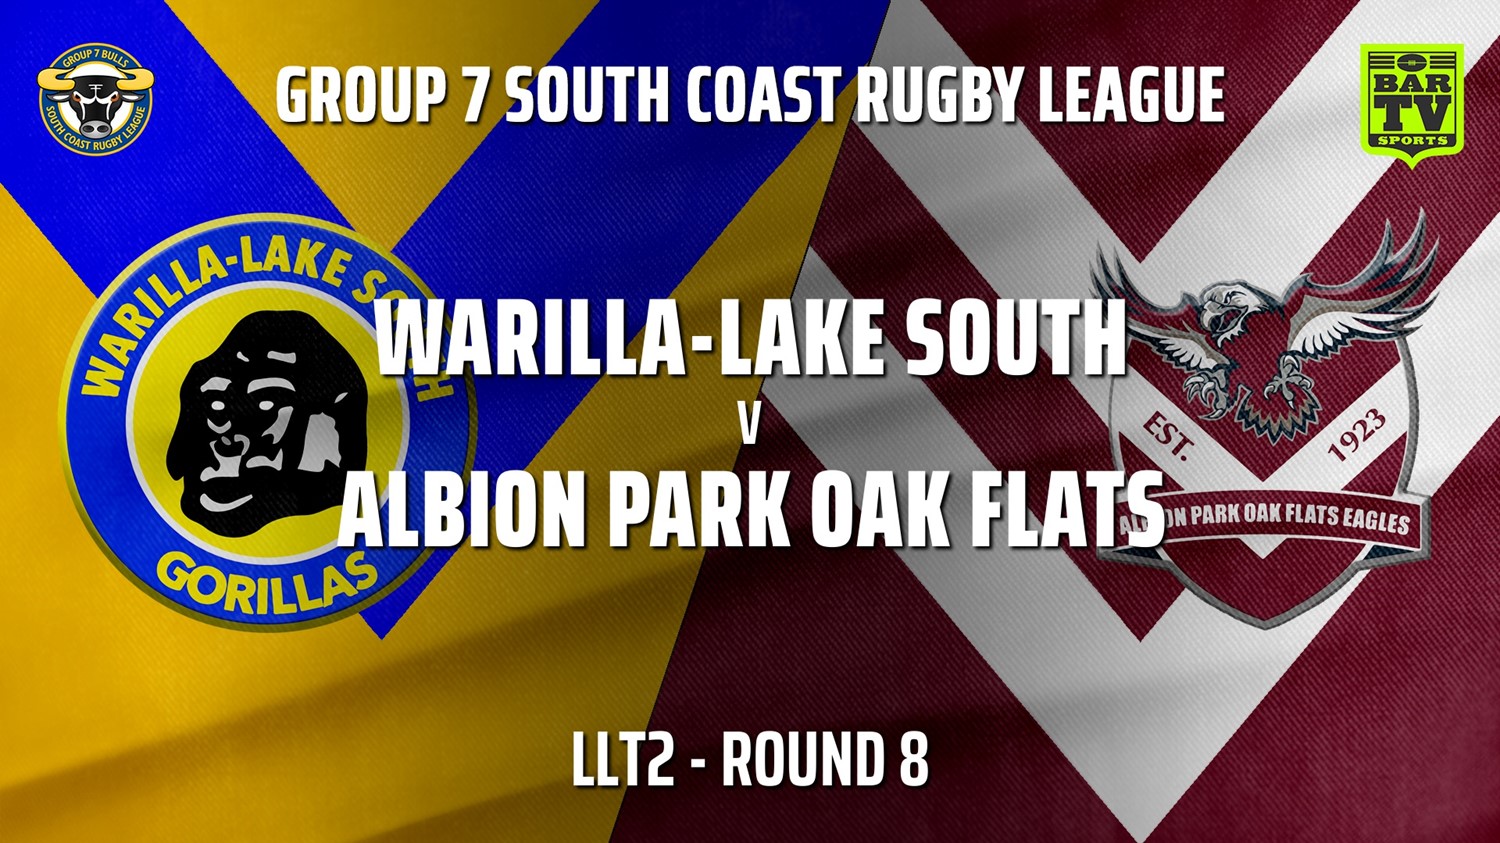 210606-Group 7 RL Round 8 - LLT2 - Warilla-Lake South v Albion Park Oak Flats Slate Image